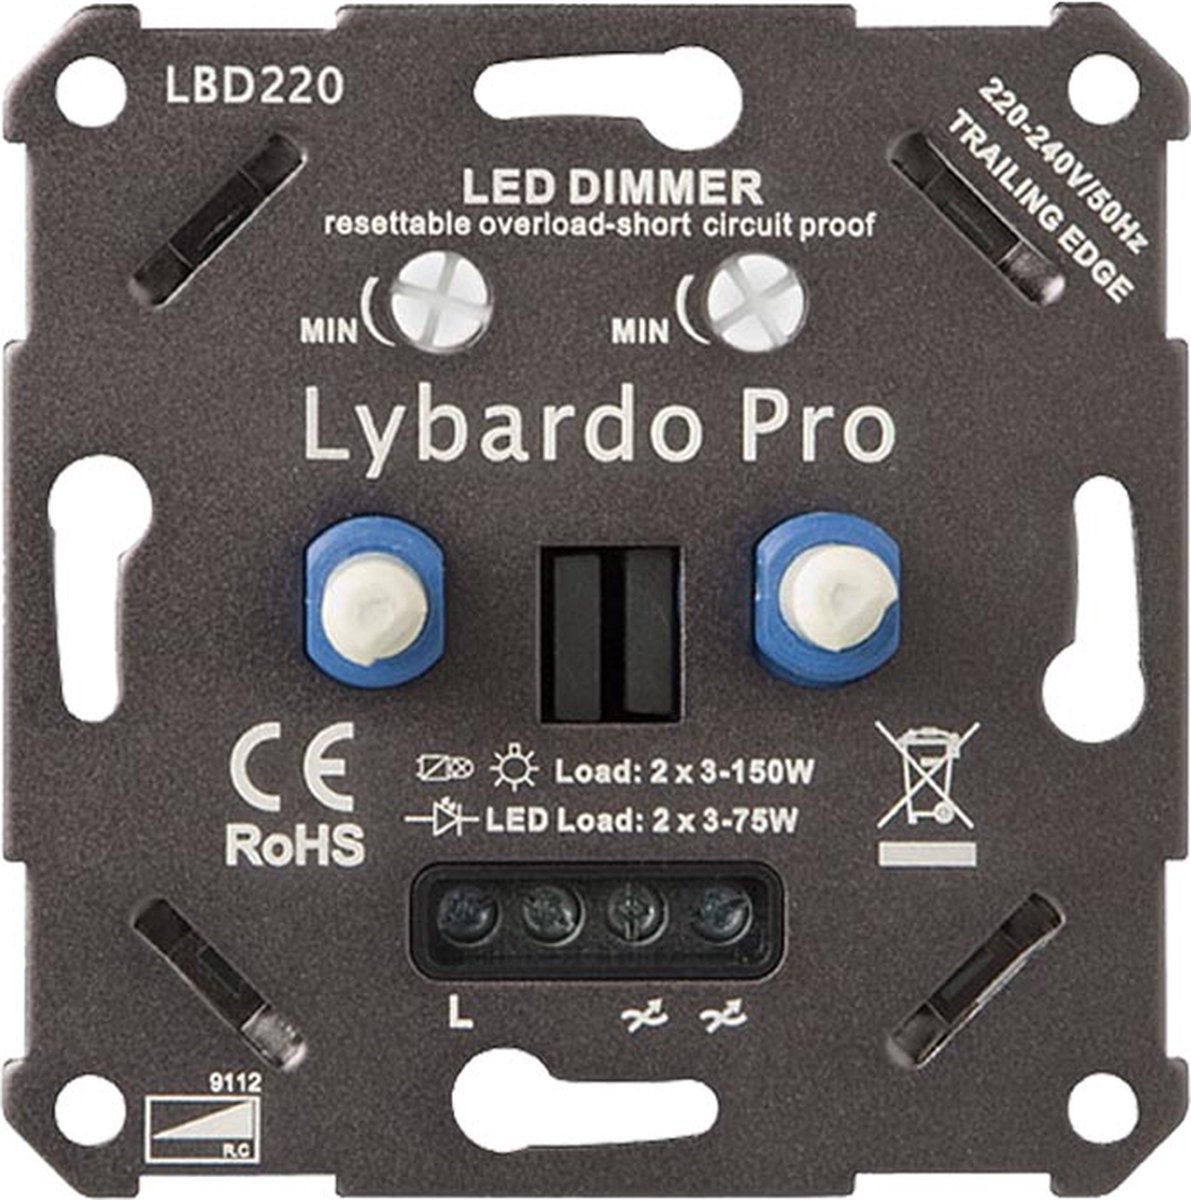 Lybardo ITEC 2 x 3-75W Pro LED Duo Dimmer - Fase Afsnijding - Universeel - Elektronische zekering - Inbouw - Lybardo